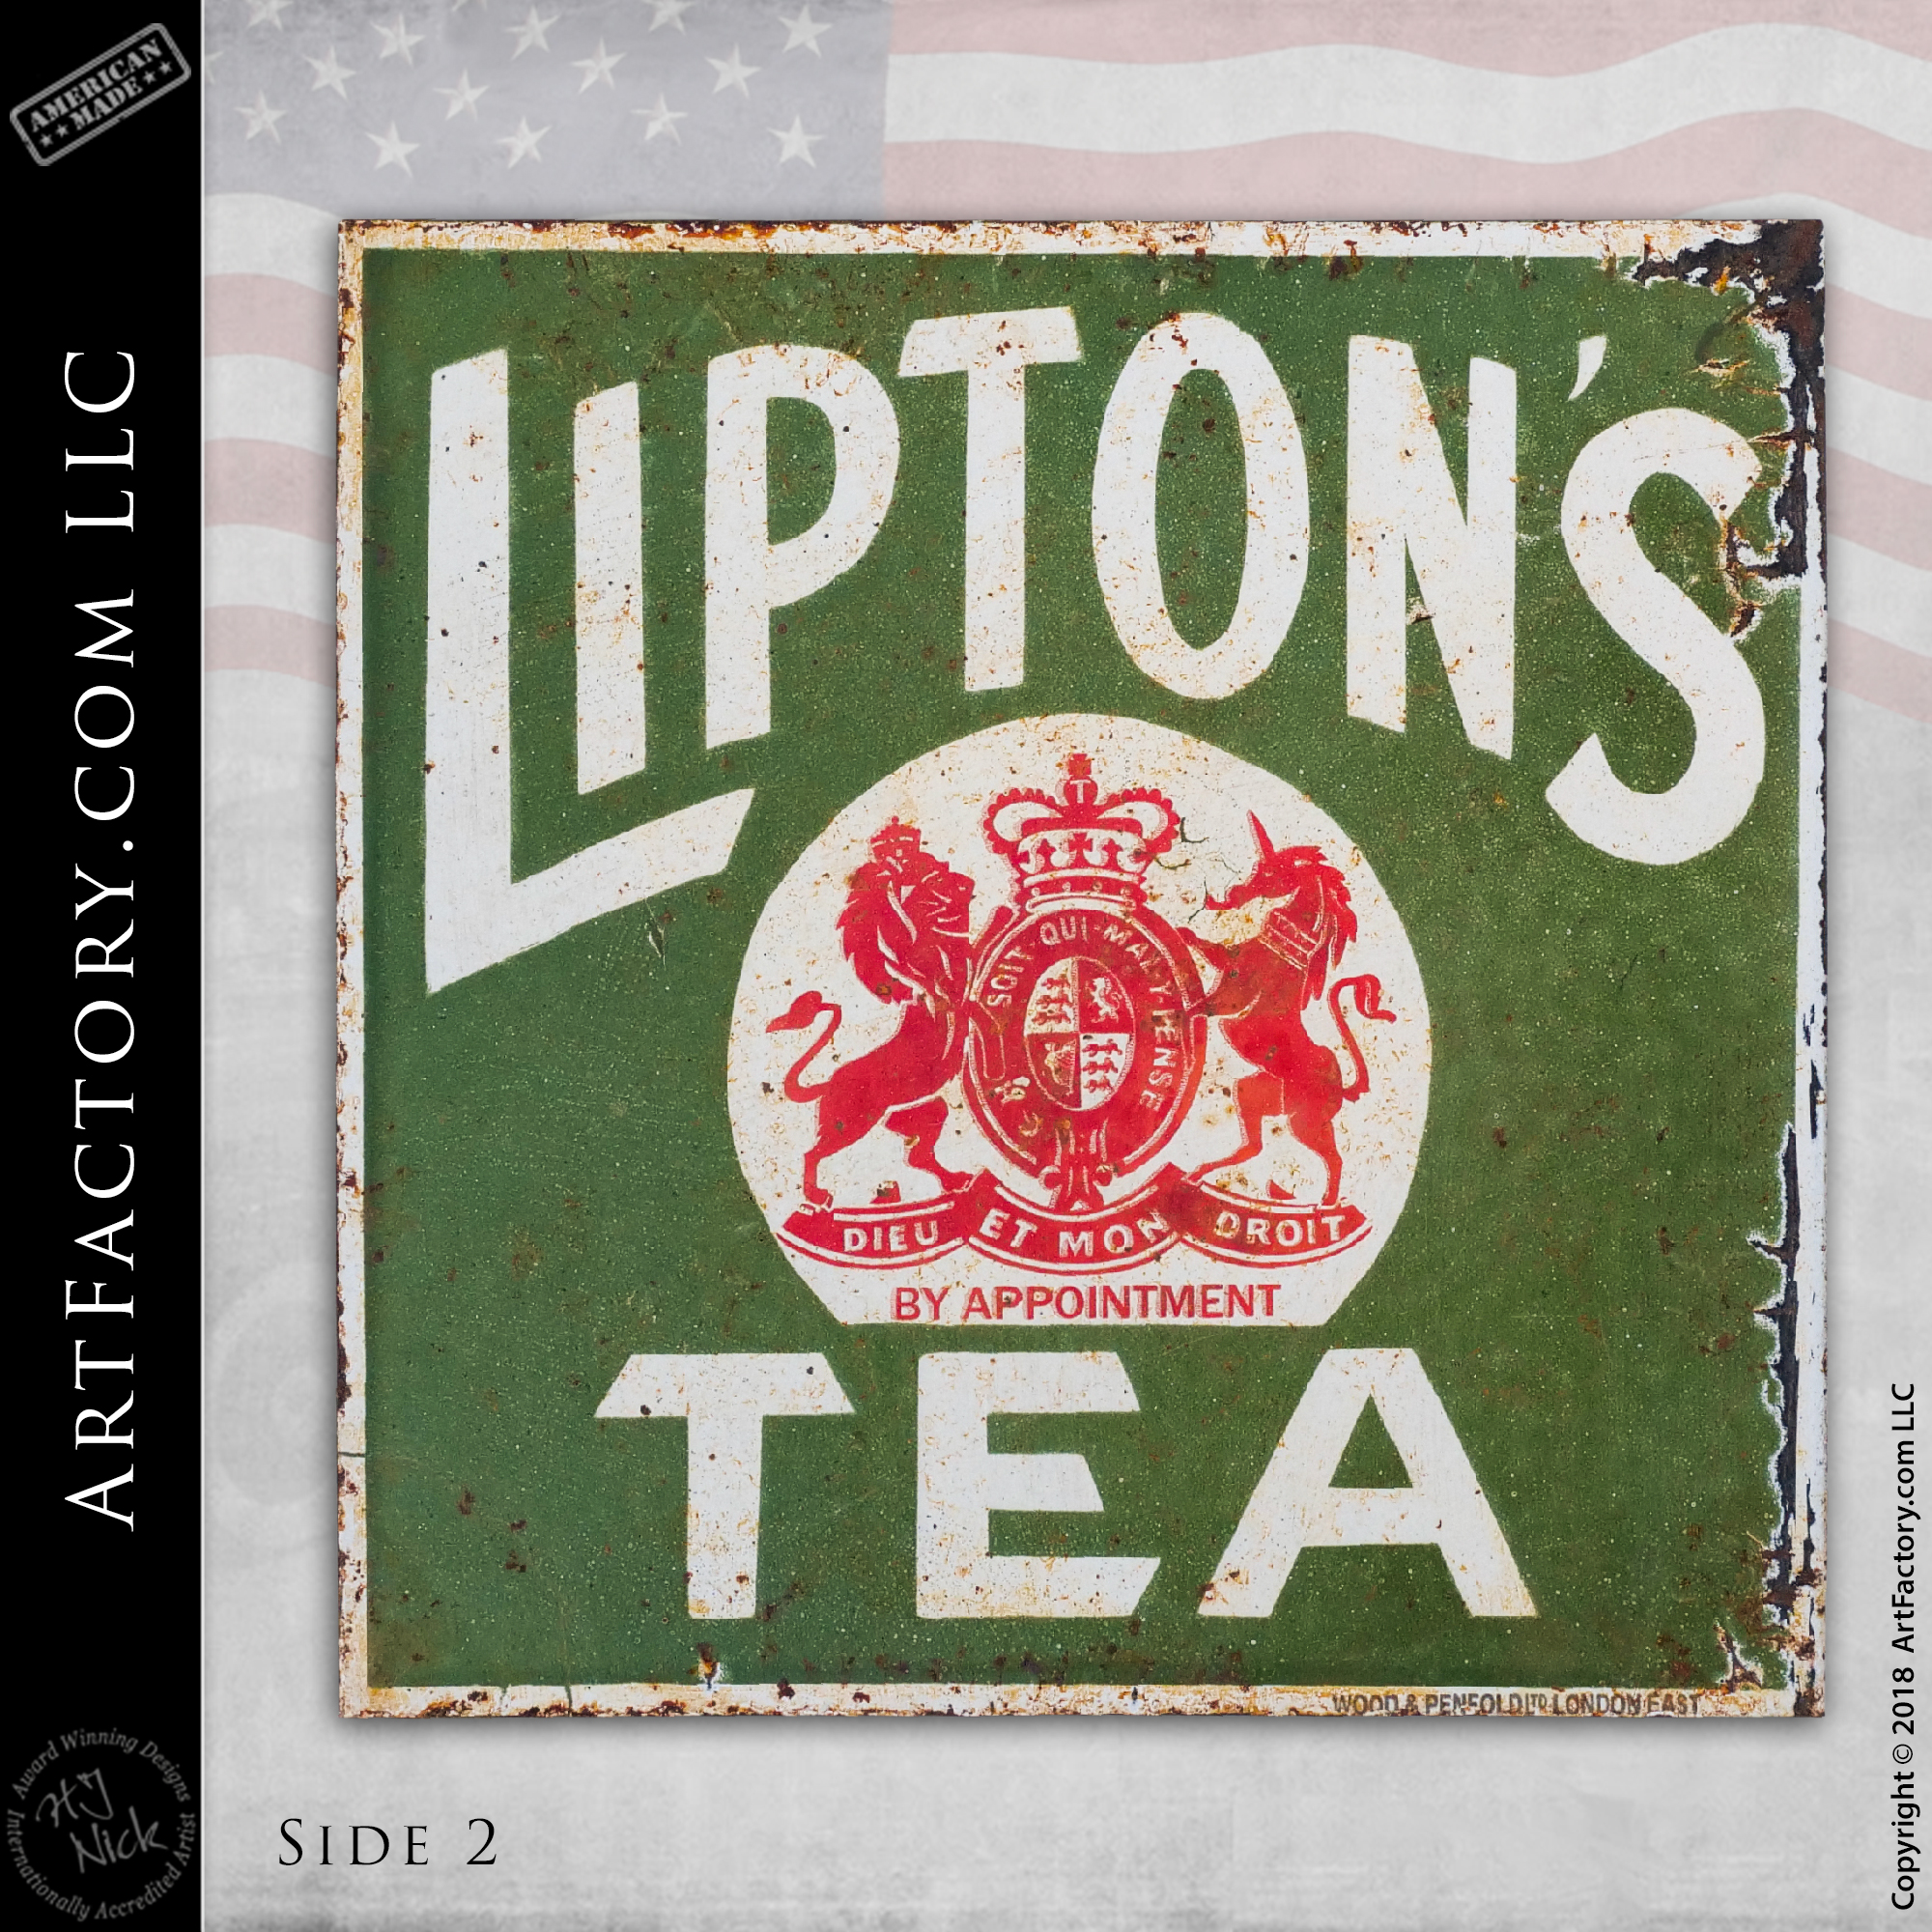 Liptons Tea Flange